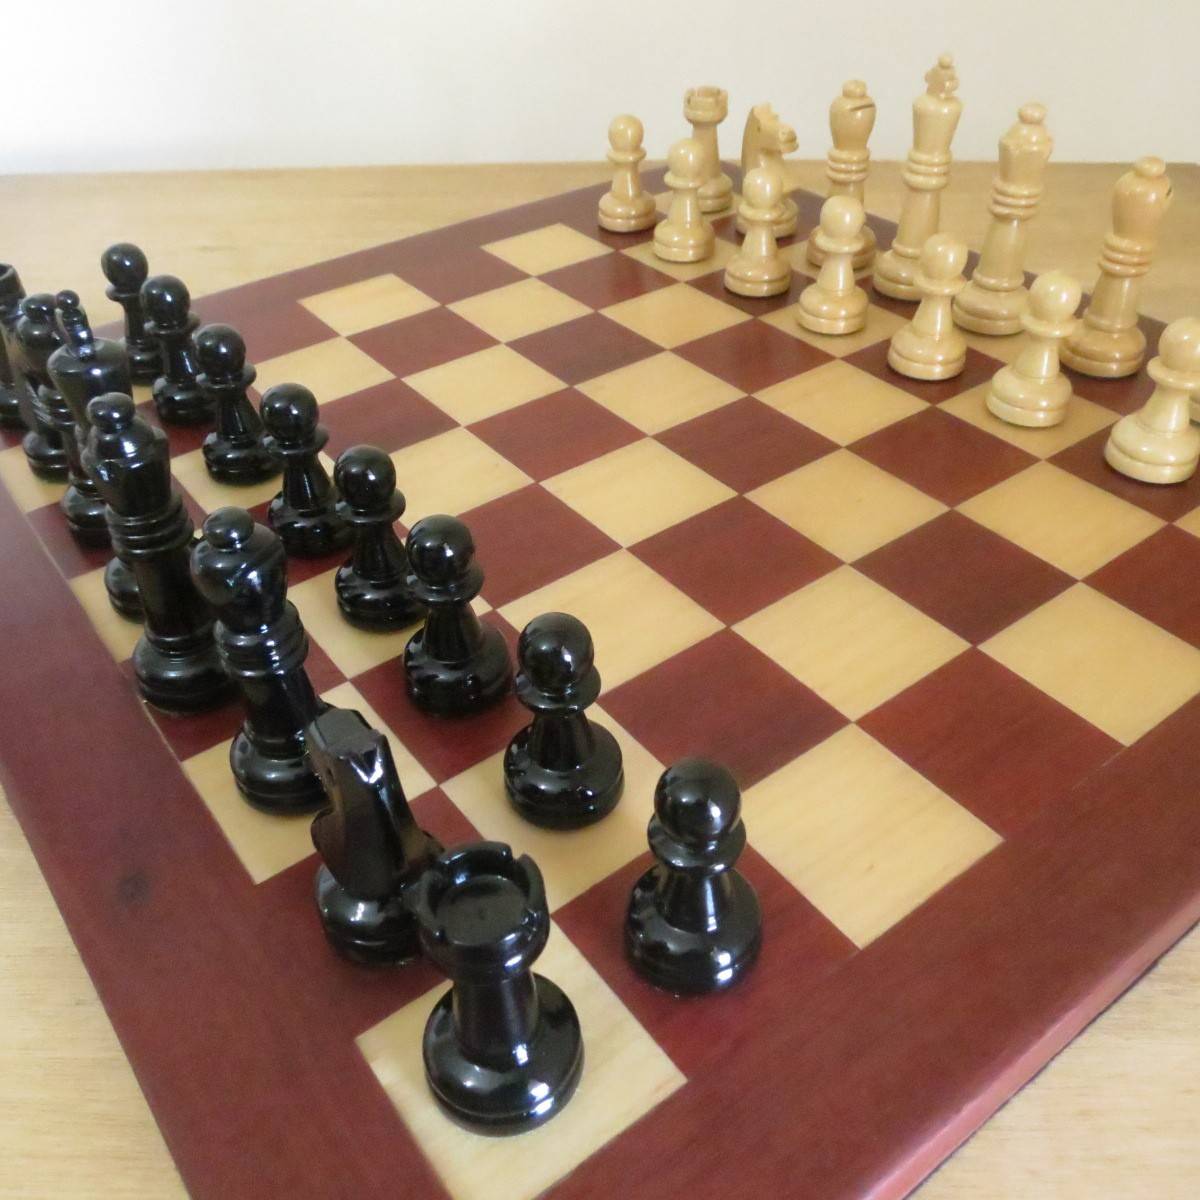 Jogo de xadrez profissional e tabuleiro – Jadoube